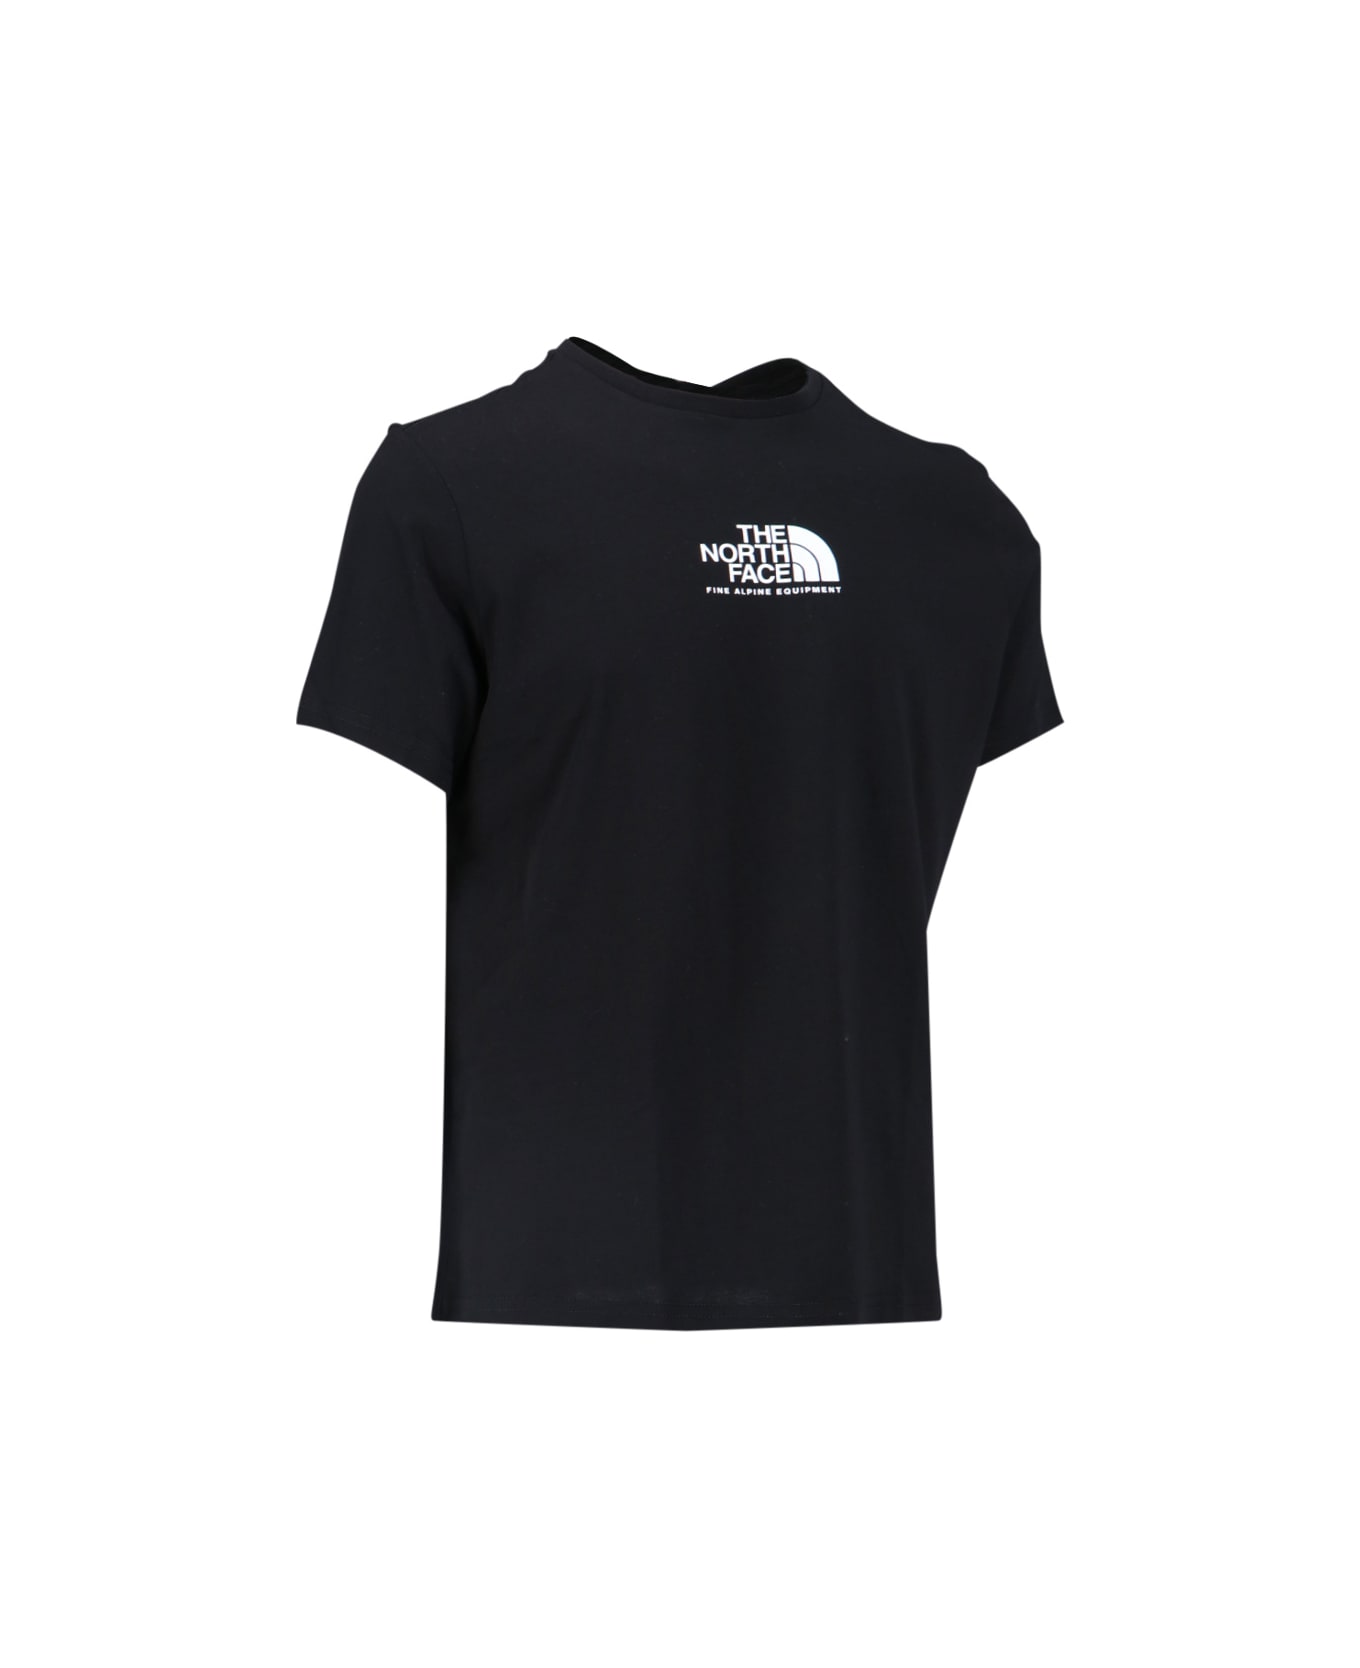 The North Face 'fine Alpine Equipment' T-shirt - Black  